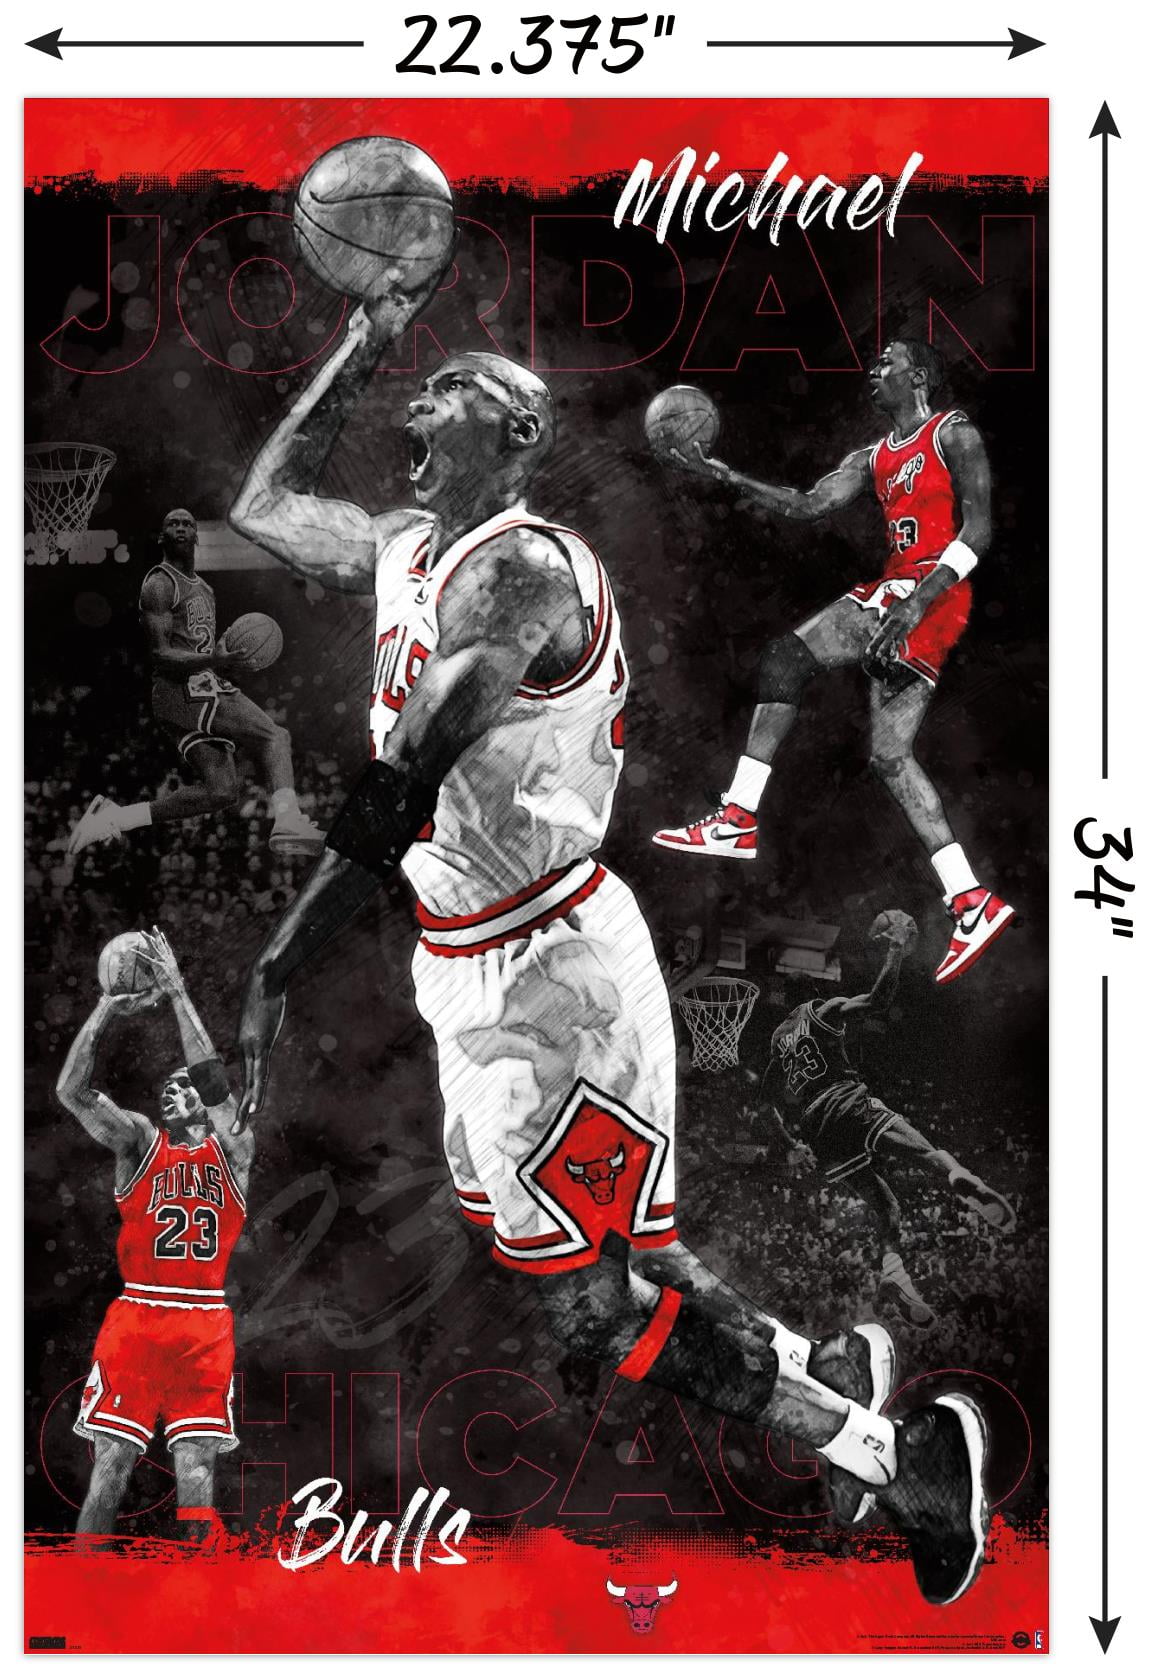  Trends International Michael Jordan - Jersey Wall Poster,  22.375 x 34, Print and Black Hanger Bundle: Posters & Prints